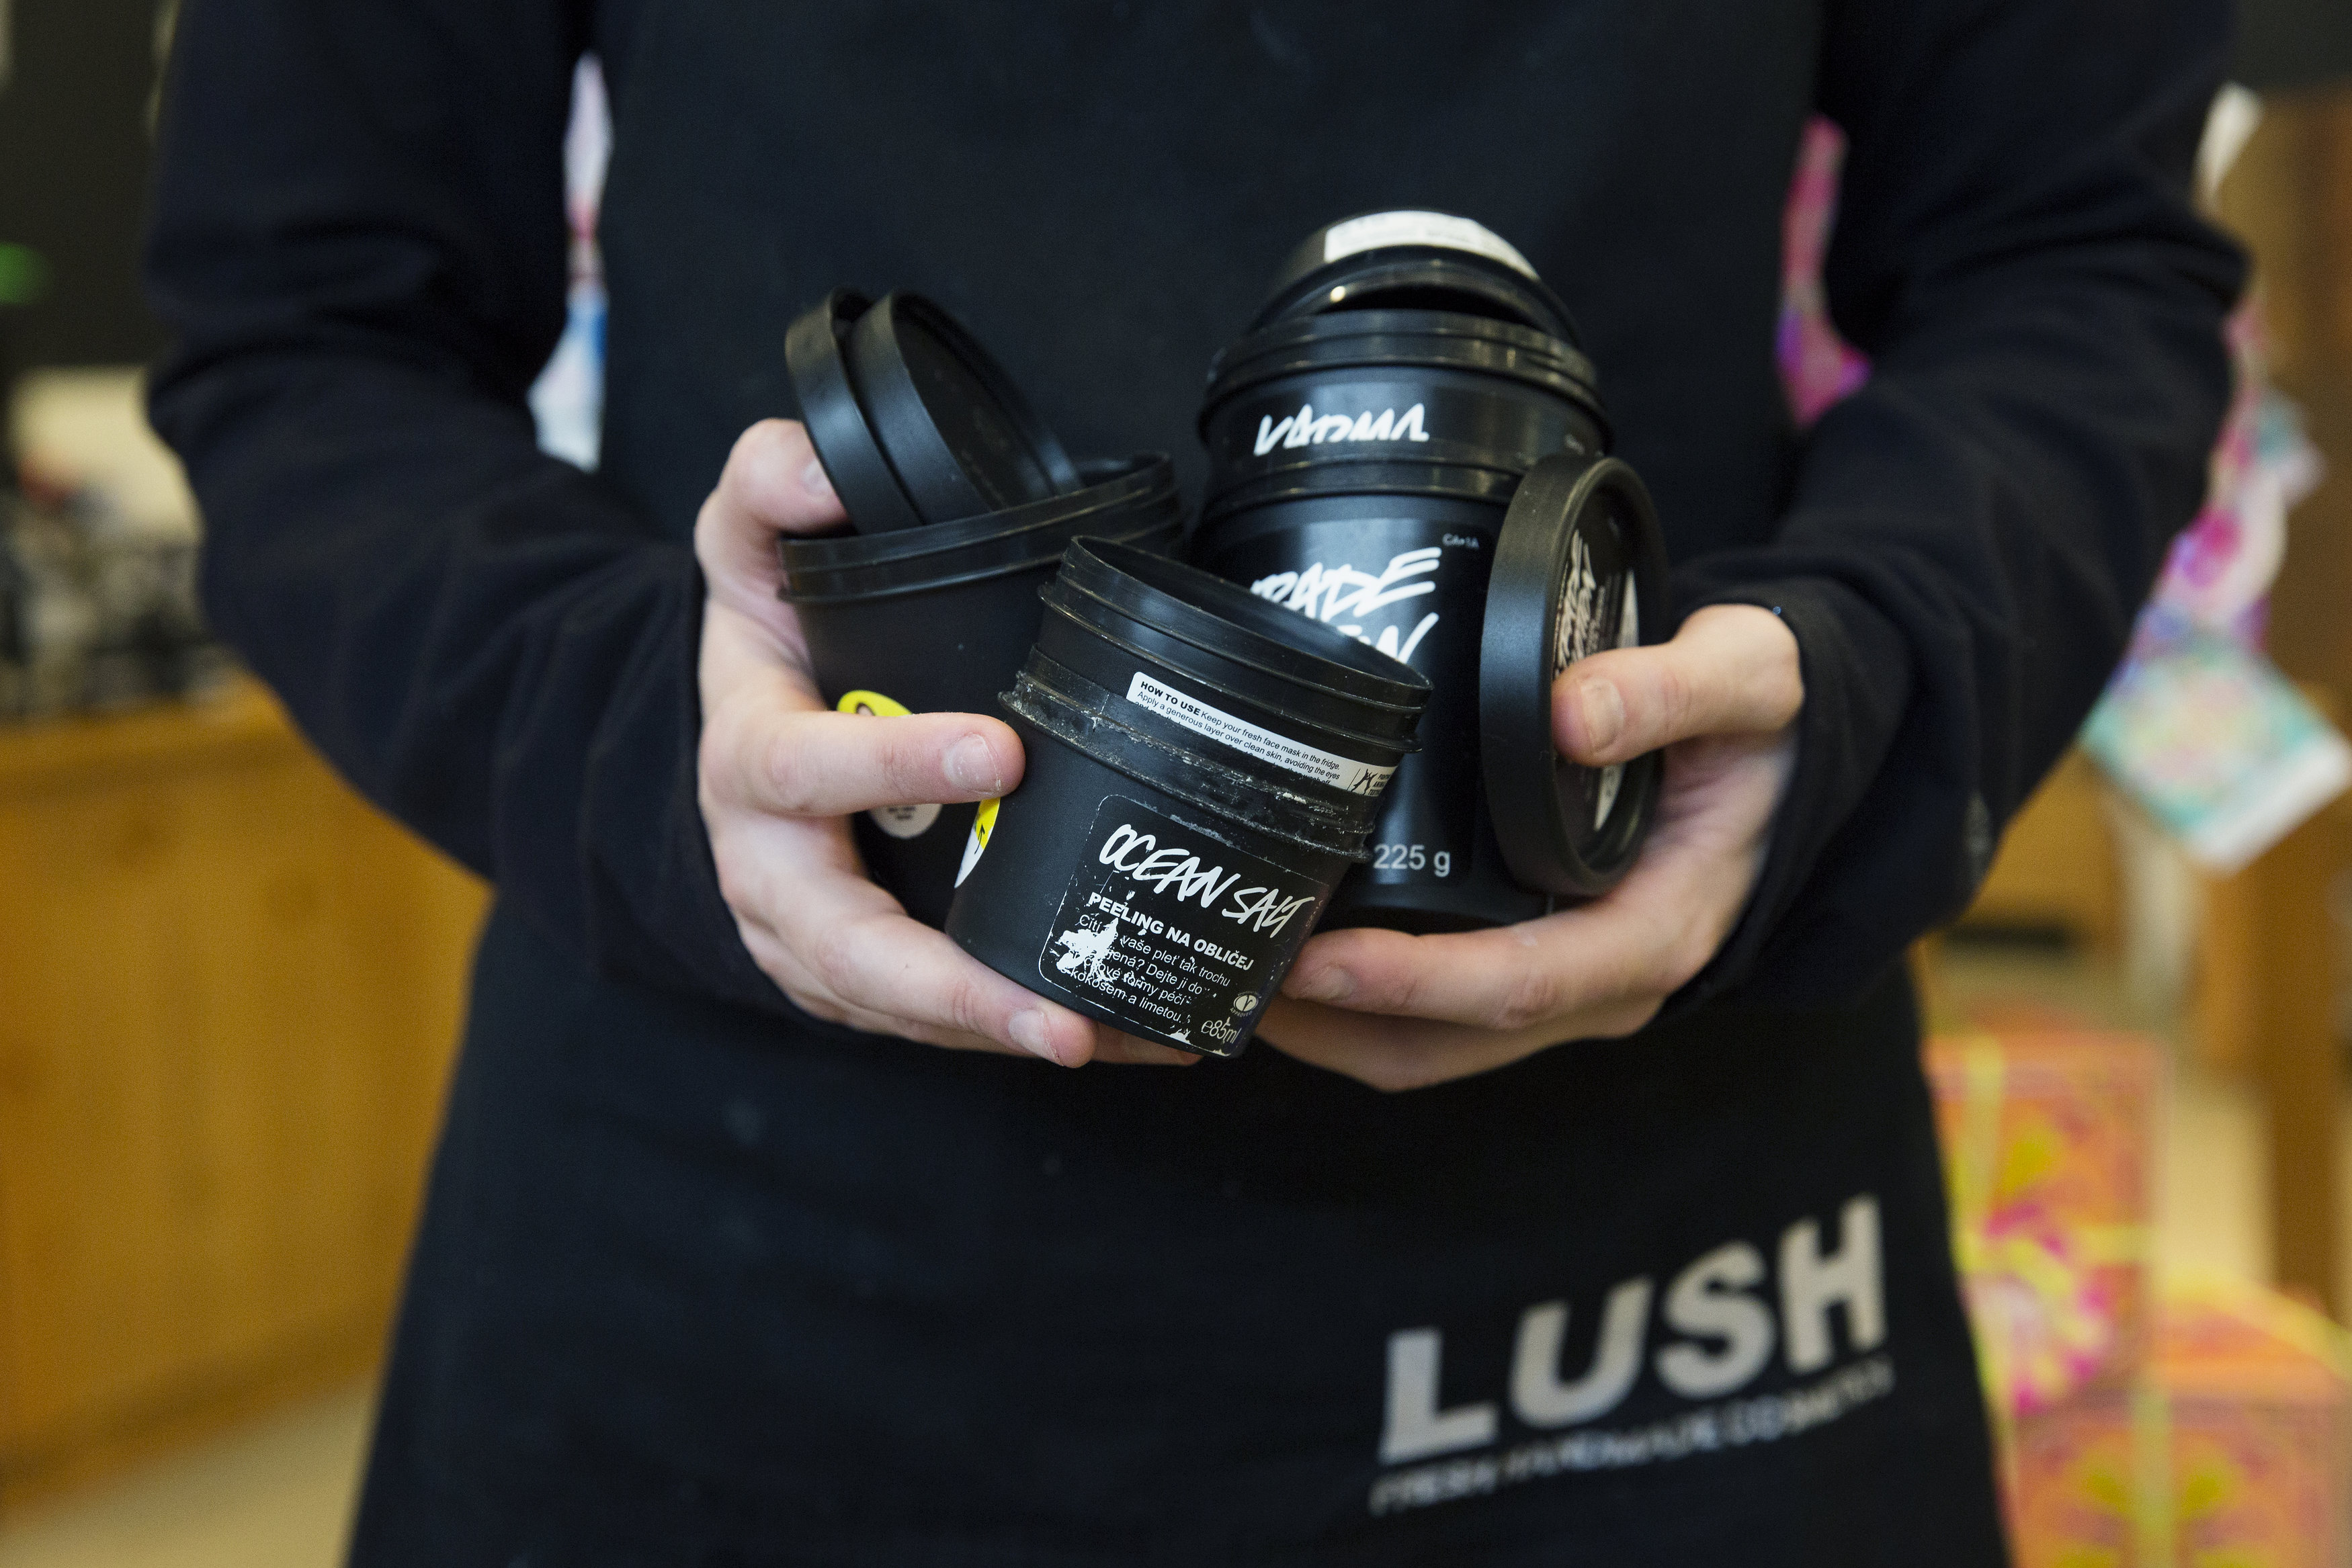 How cosmetics retailer Lush is making purposeful profit through circularity